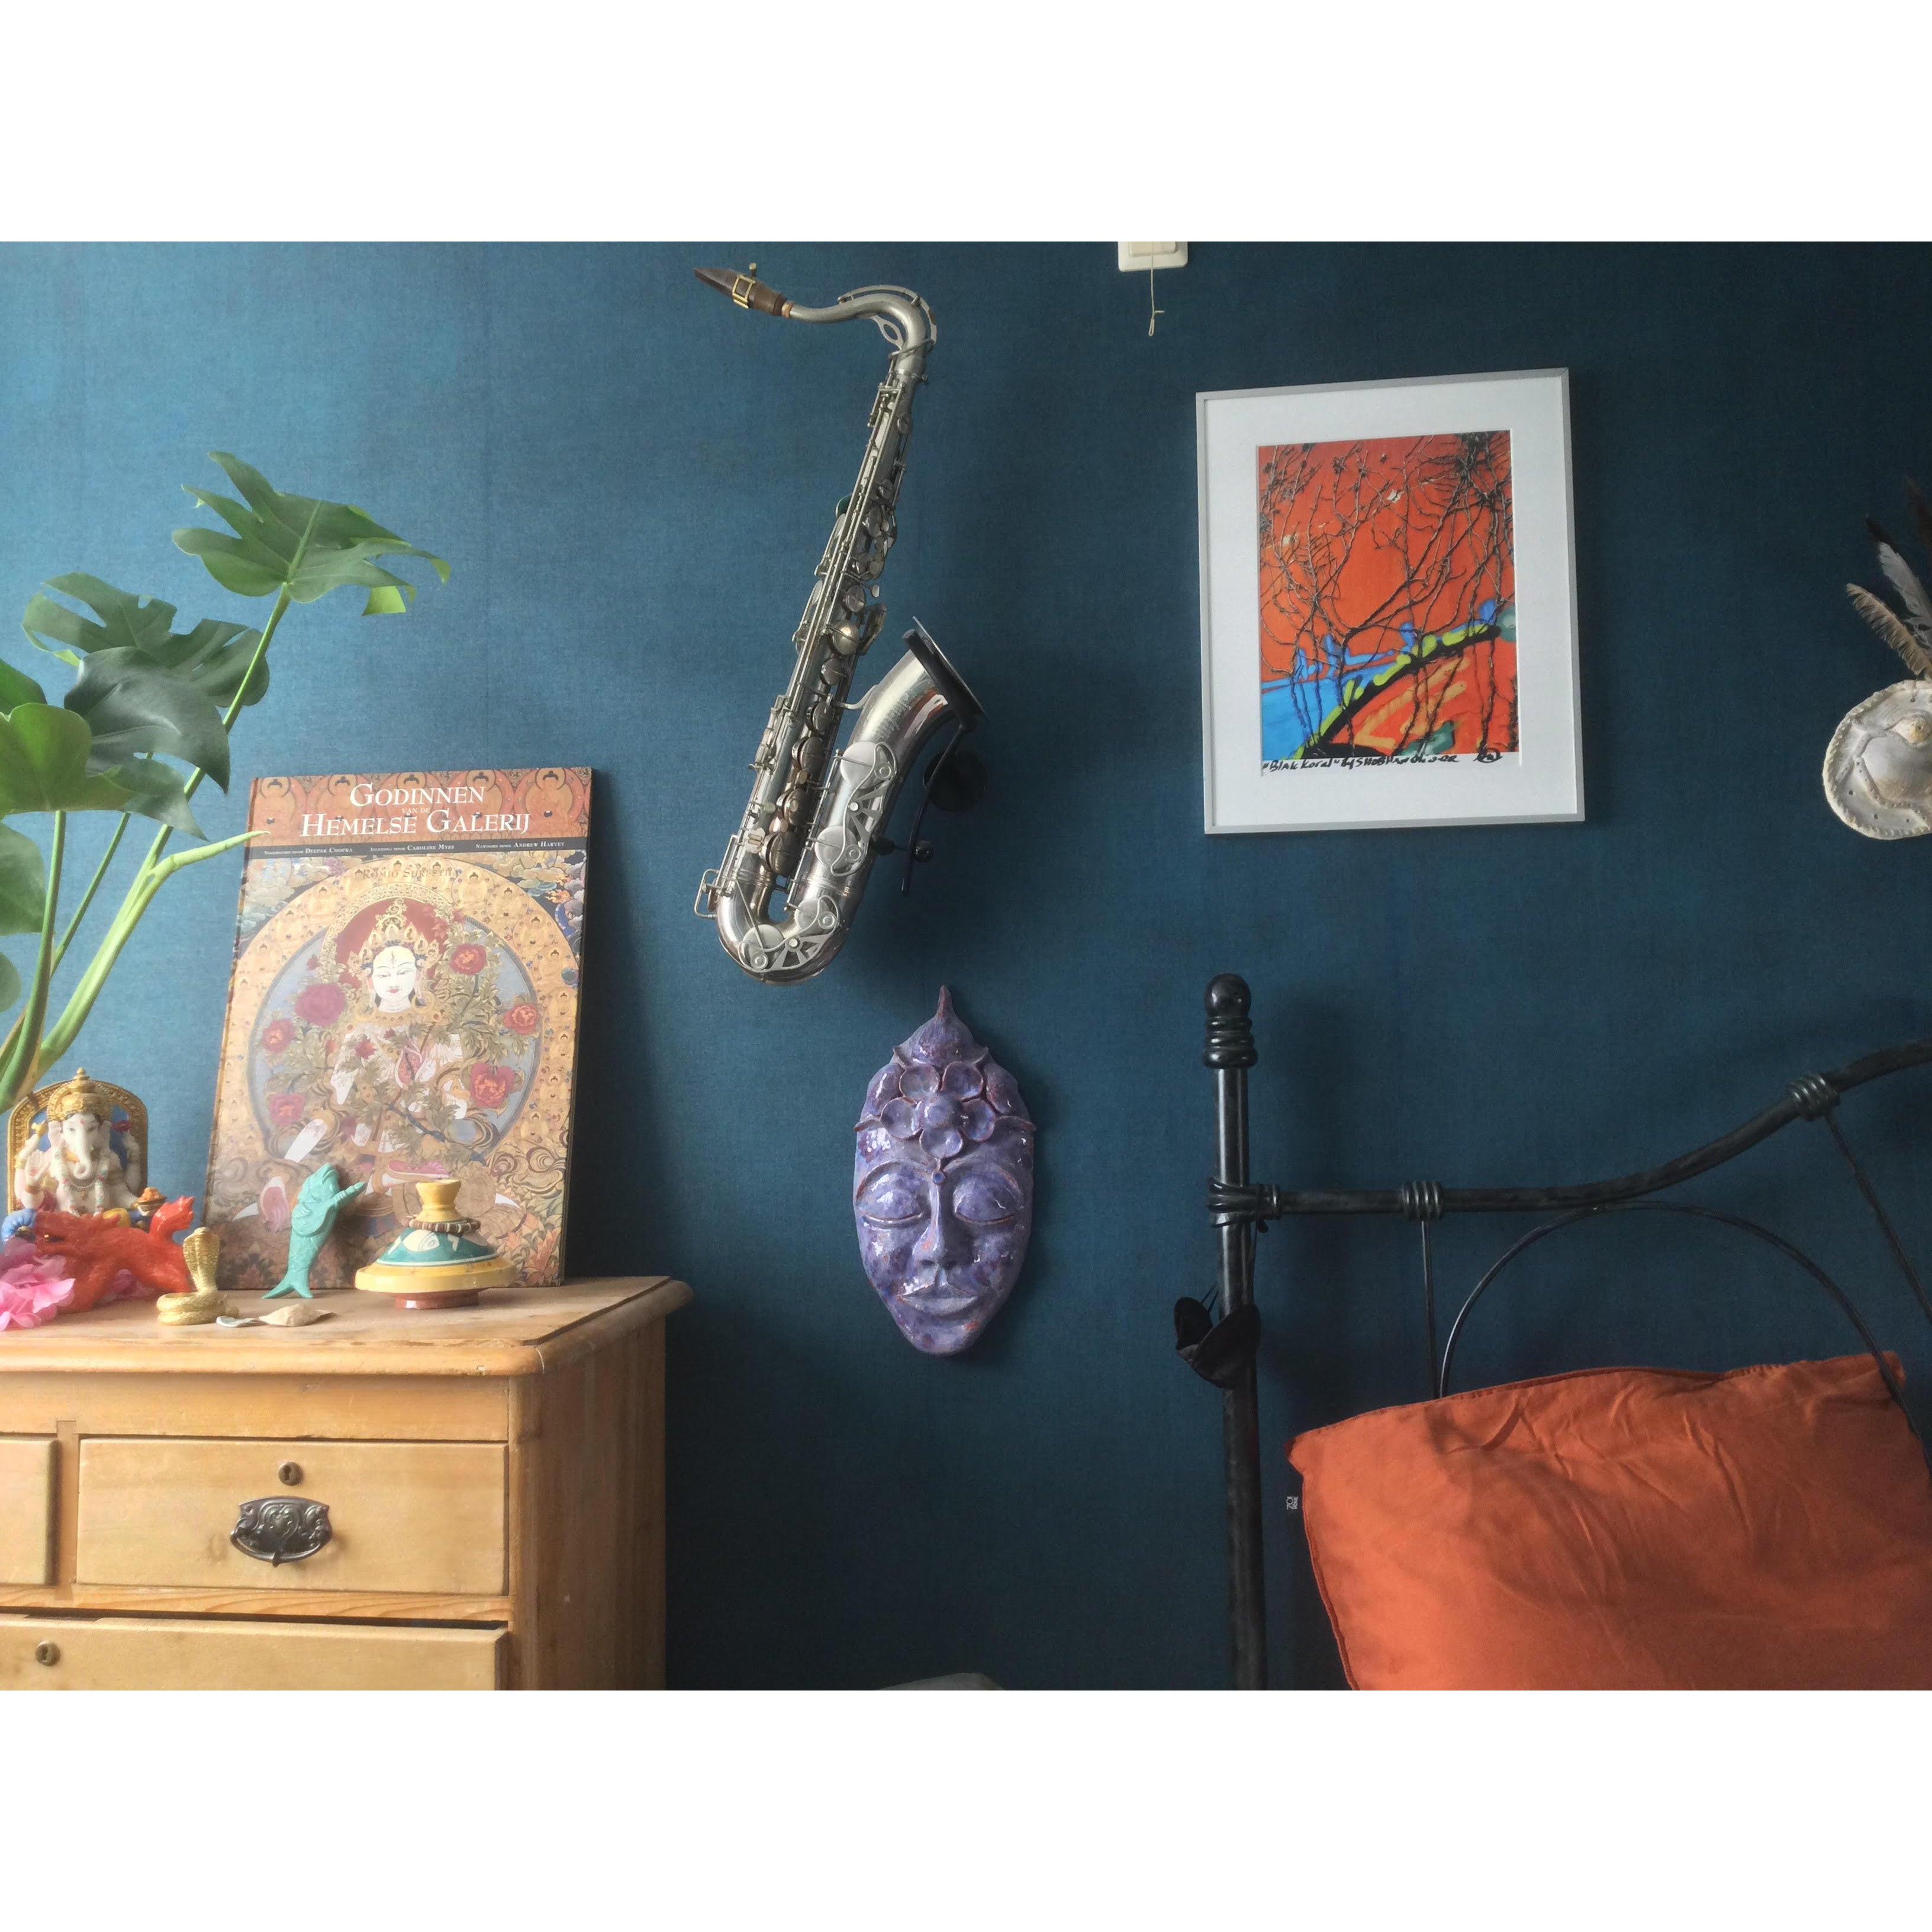 cozy bedroom with tenor saxophone in Locoparasaxo wallmount and several art pieces